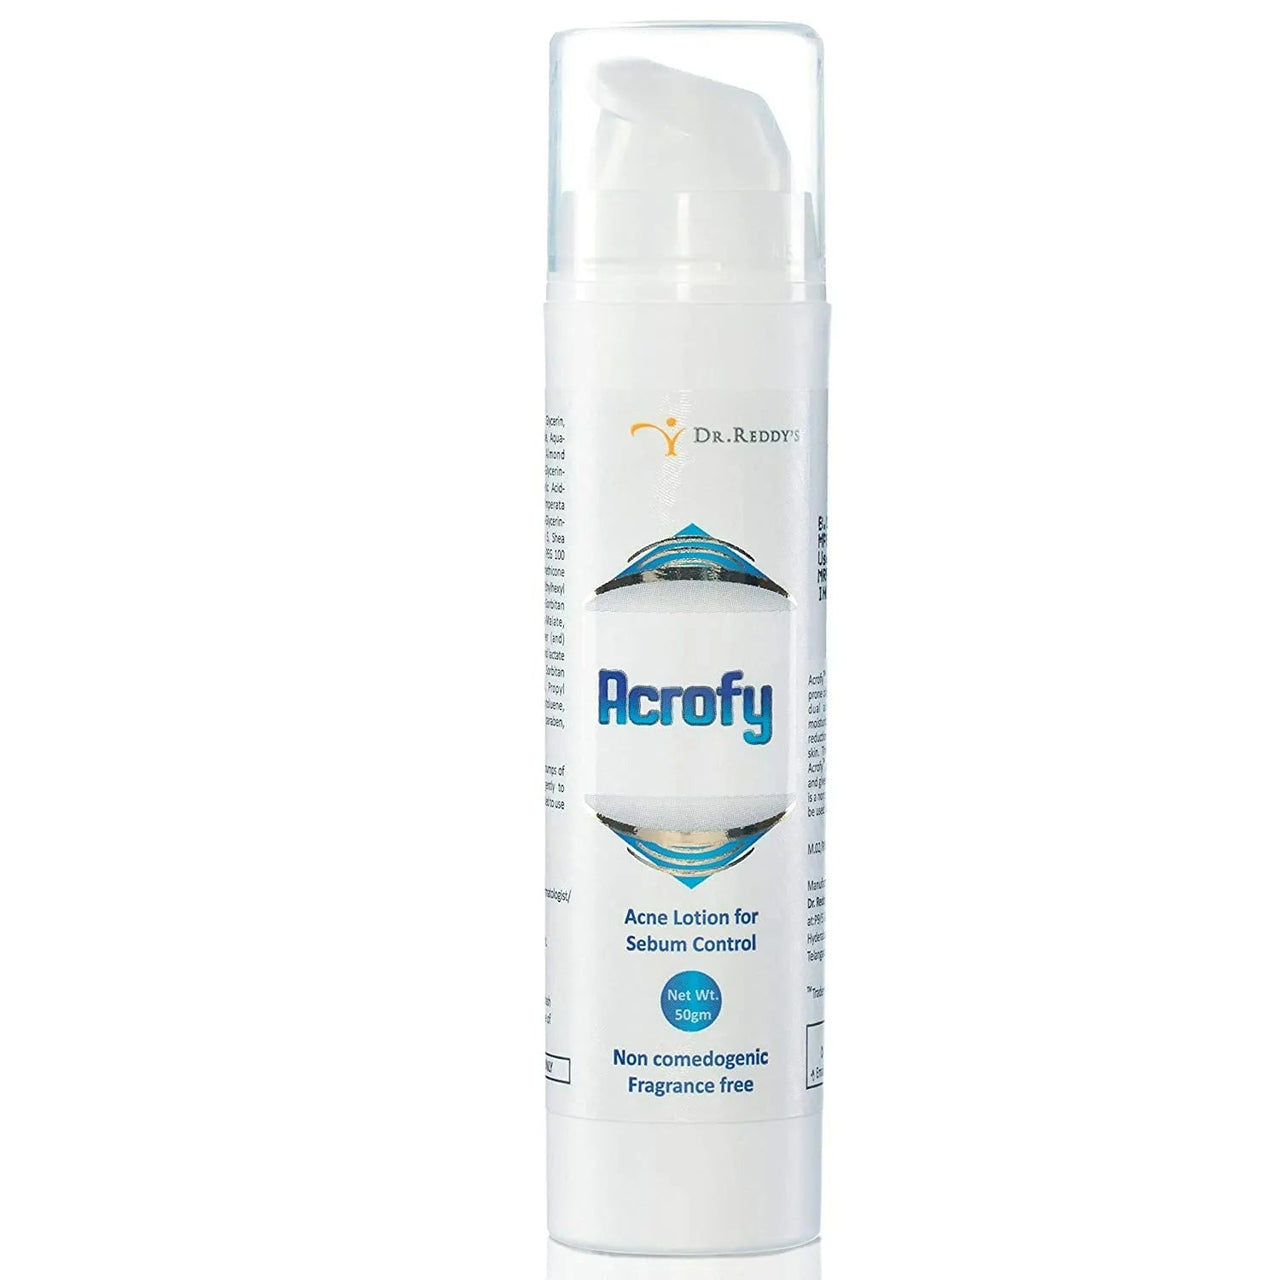 Dr. Reddy's Acrofy Moisturizer for Acne Prone Skin